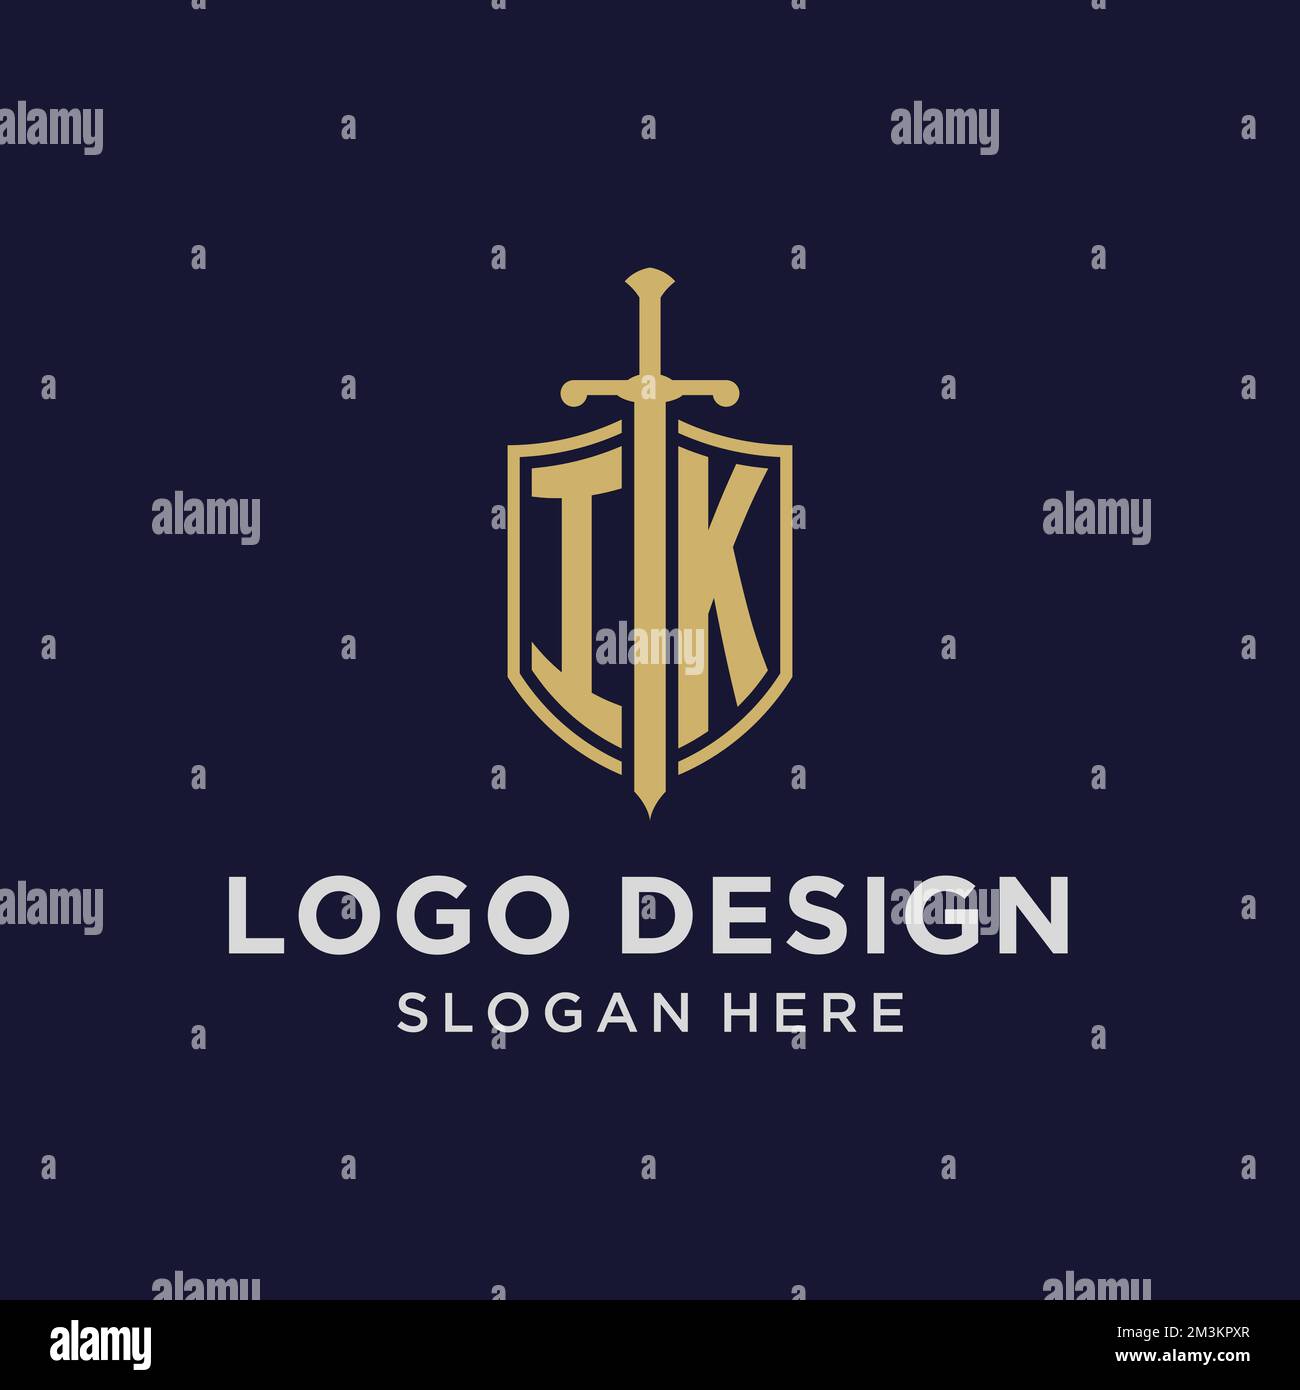 IK logo initial monogram with shield and sword design ideas Stock Vector